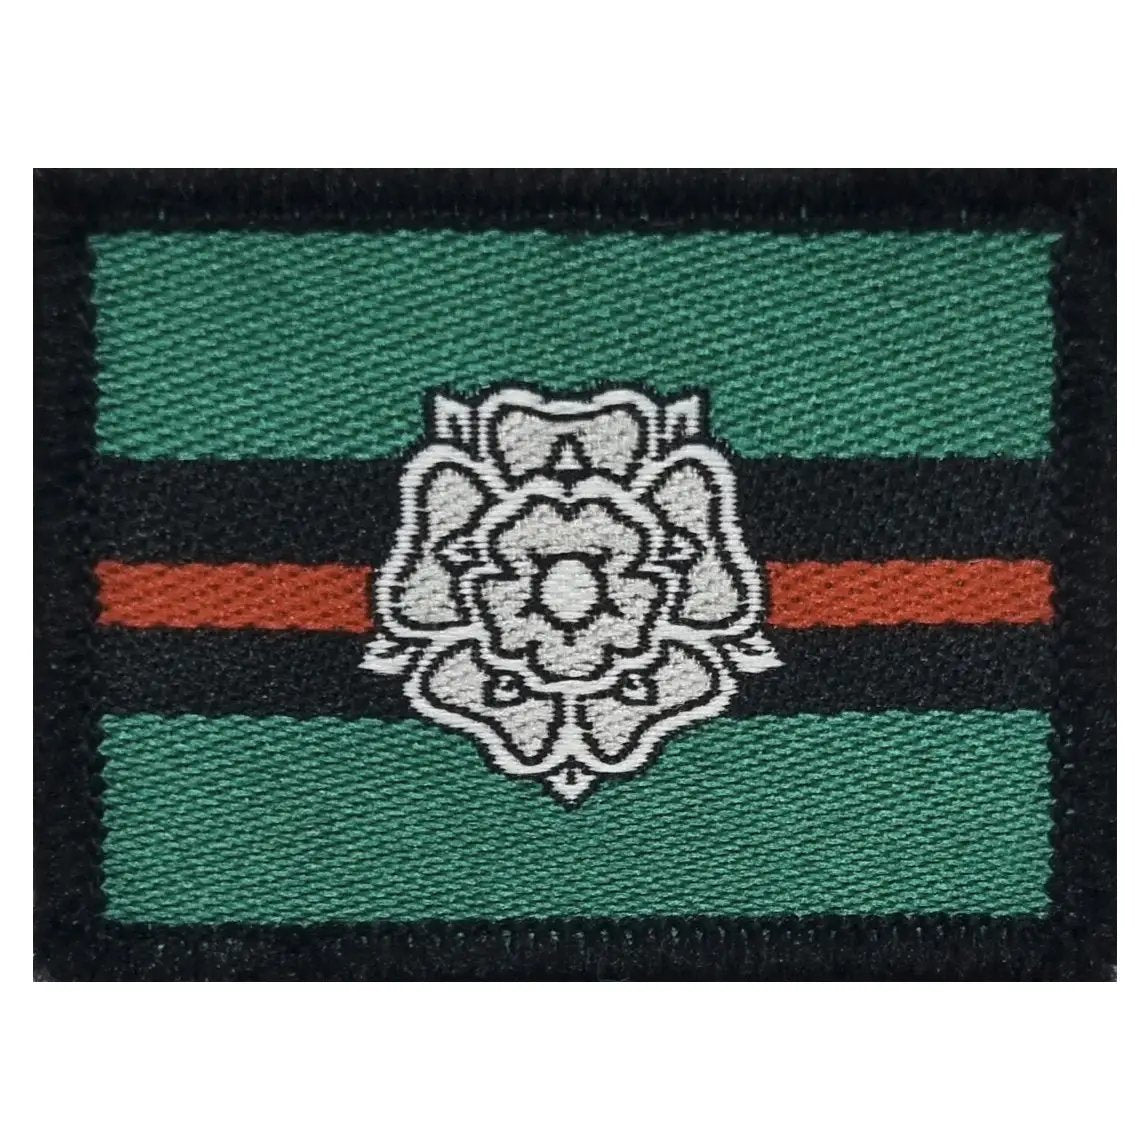 Yorkshire Regiment TRF - Iron or Sewn On Flash - John Bull Clothing